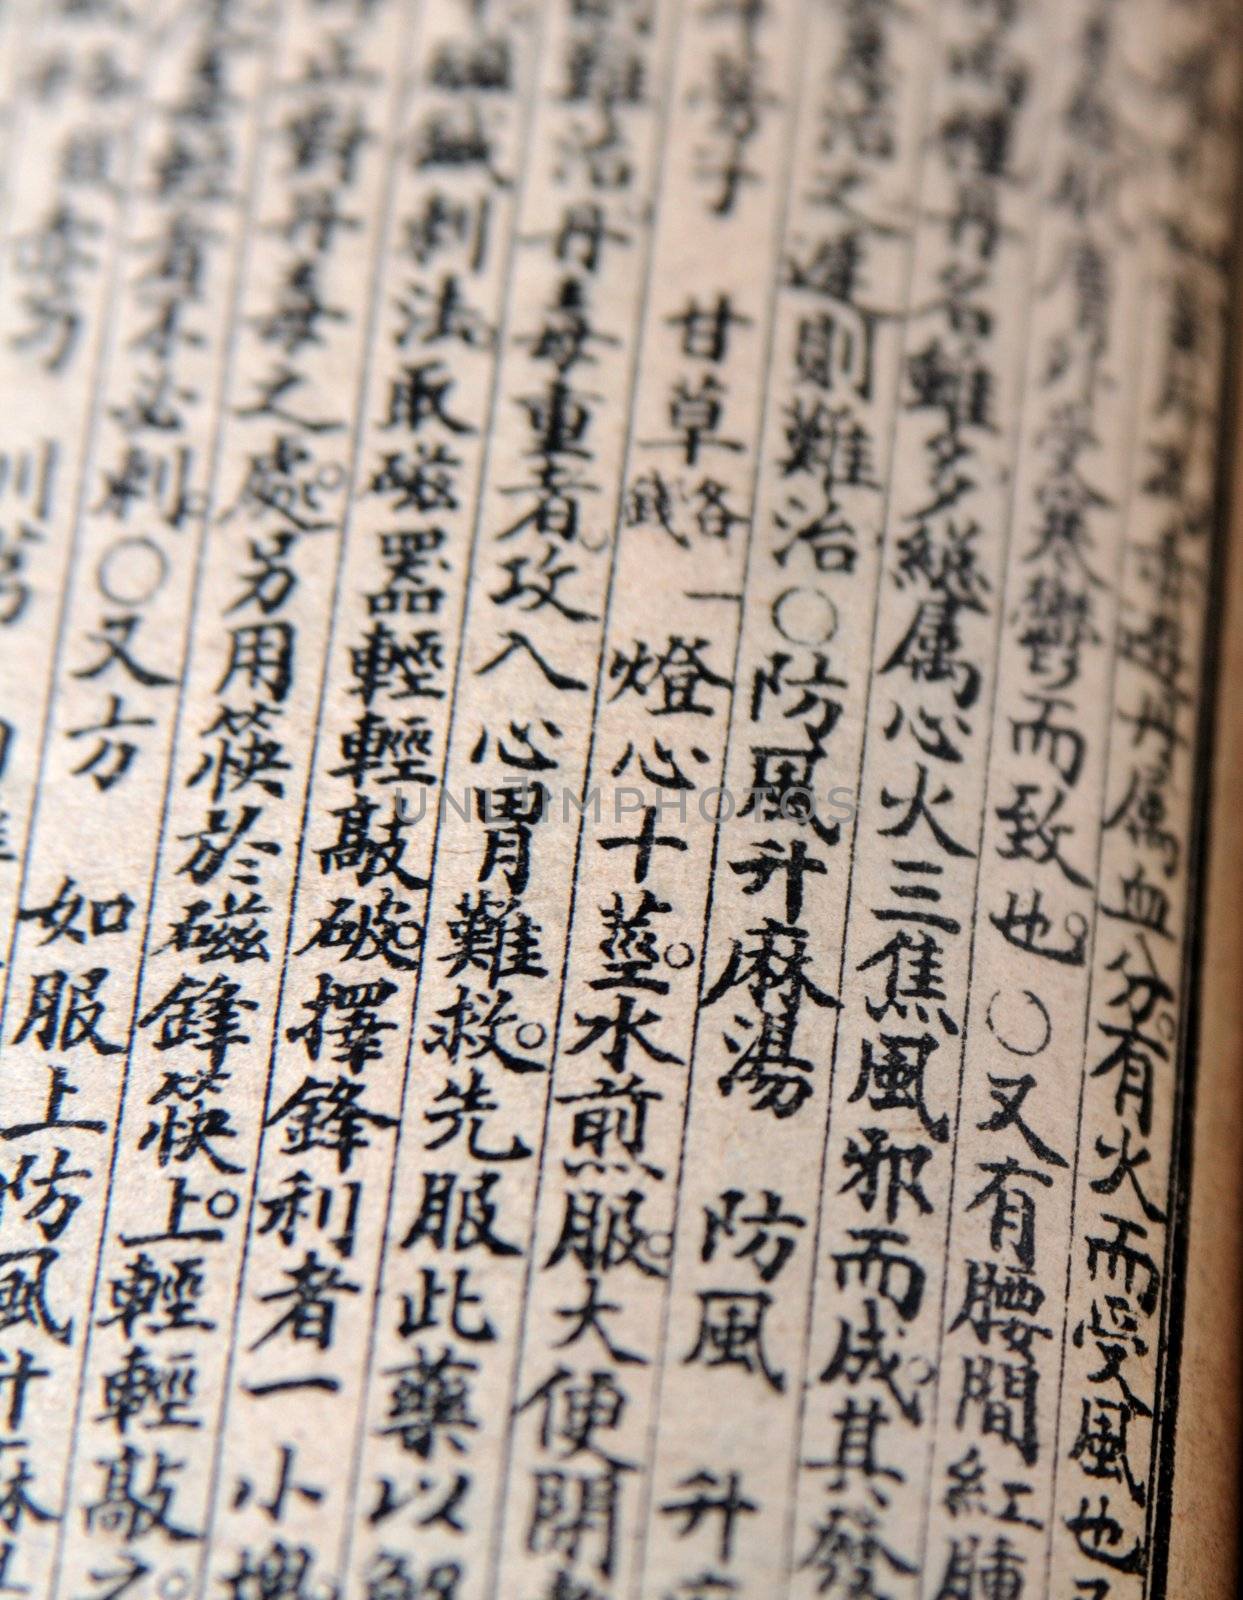 Chinese text by nebari